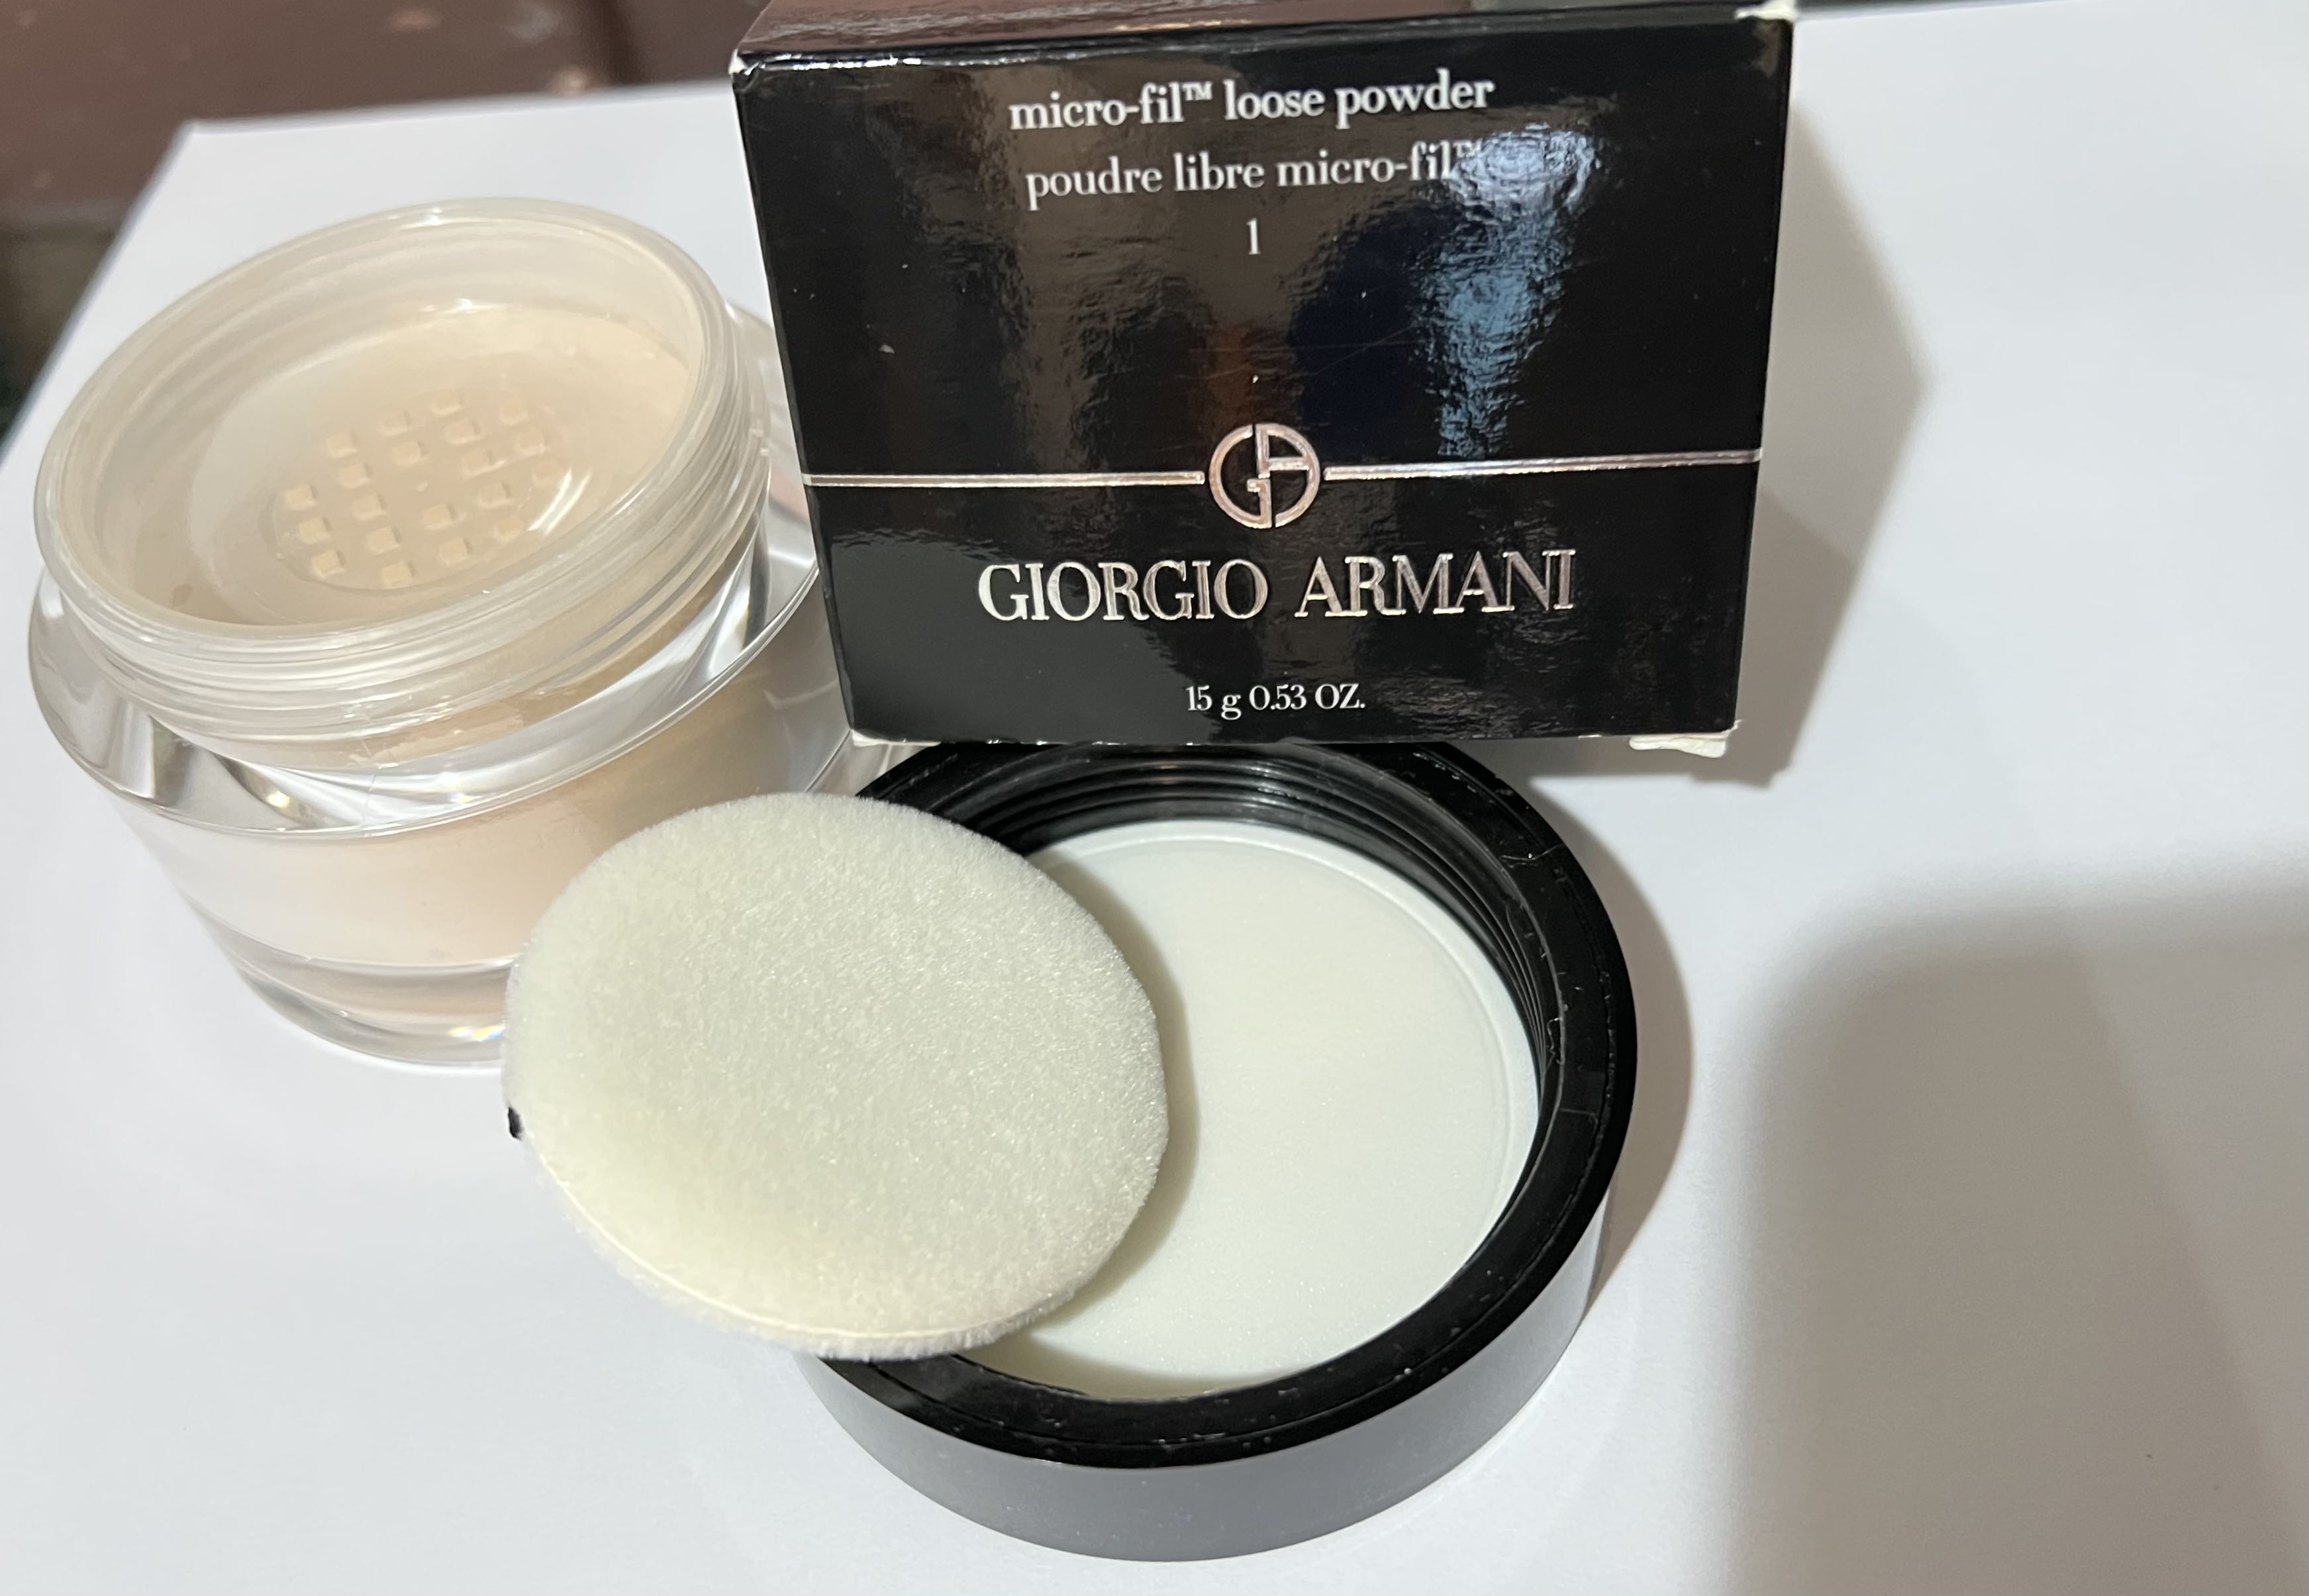 全新貨size ）Giorgio Armani micro-fil loose powder #1, 美容＆化妝品, 健康及美容- 皮膚護理,  化妝品- Carousell